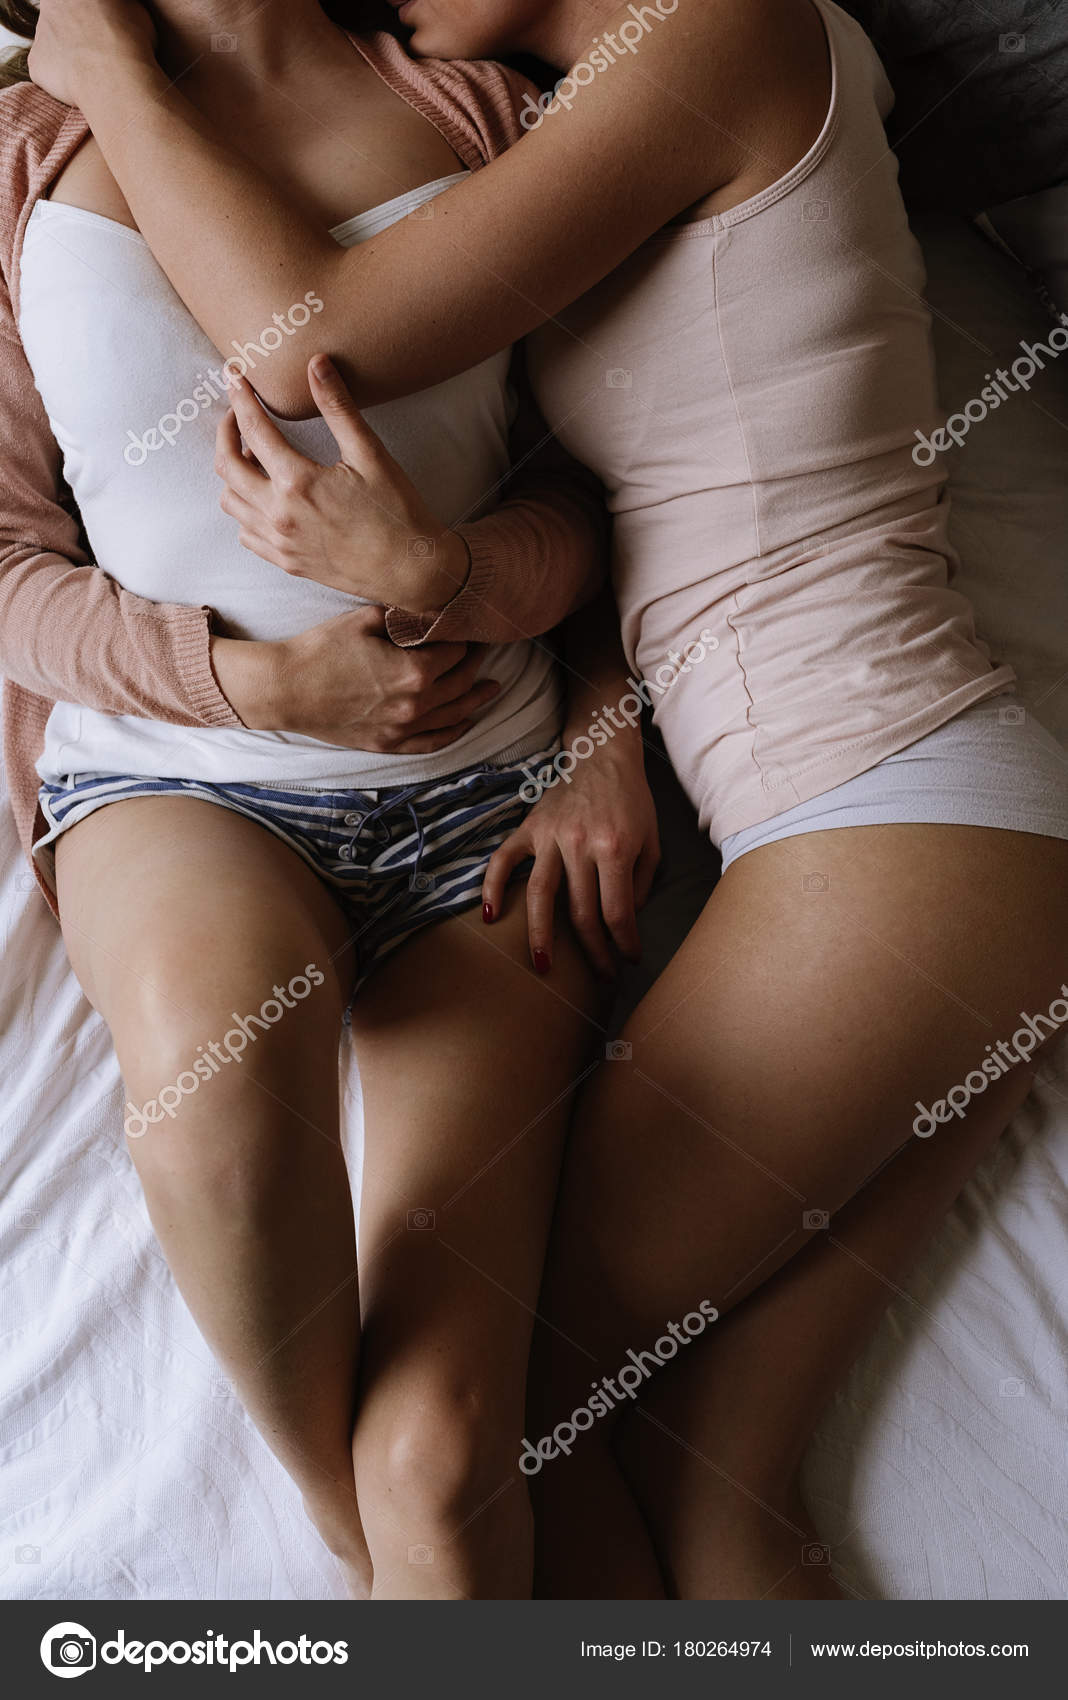 A gay couple in bed having sex Stockfotos, lizenzfreie A gay couple in bed having sex Bilder Depositphotos HQ-Bild